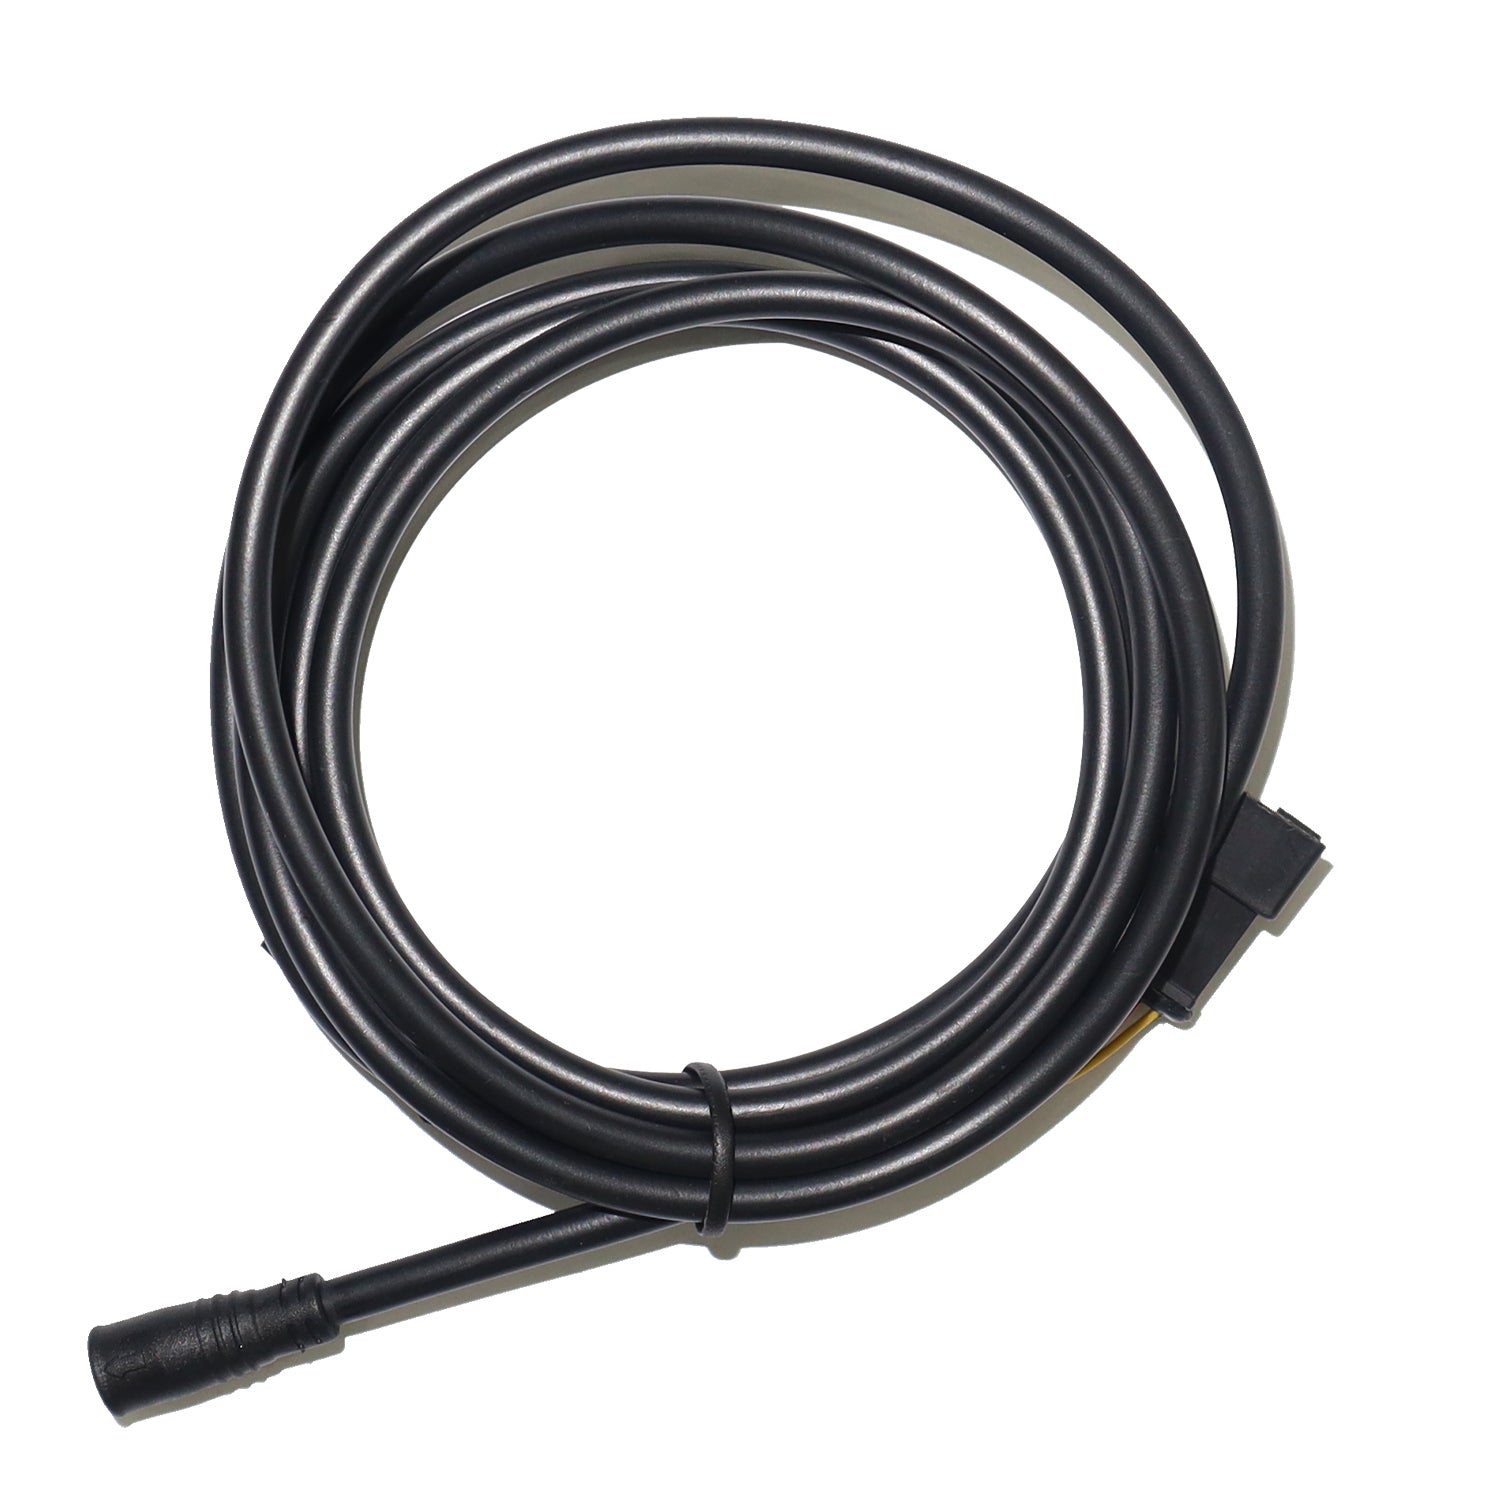 Hiboy KS4 Display Controller Cable